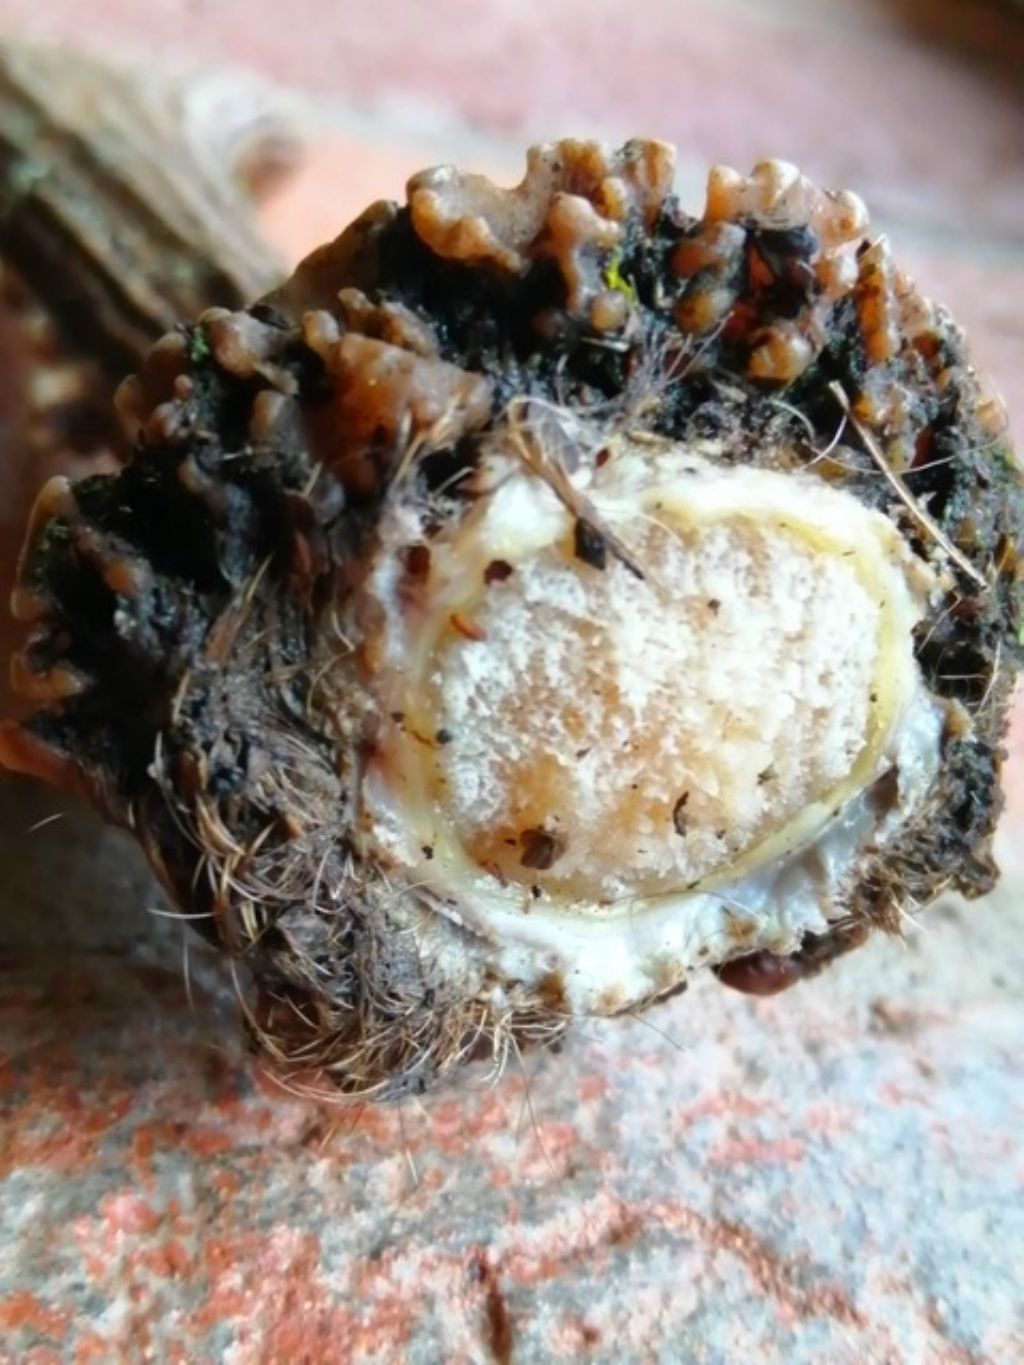 presso palchi di capriolo: Mucilago crustacea, immatura